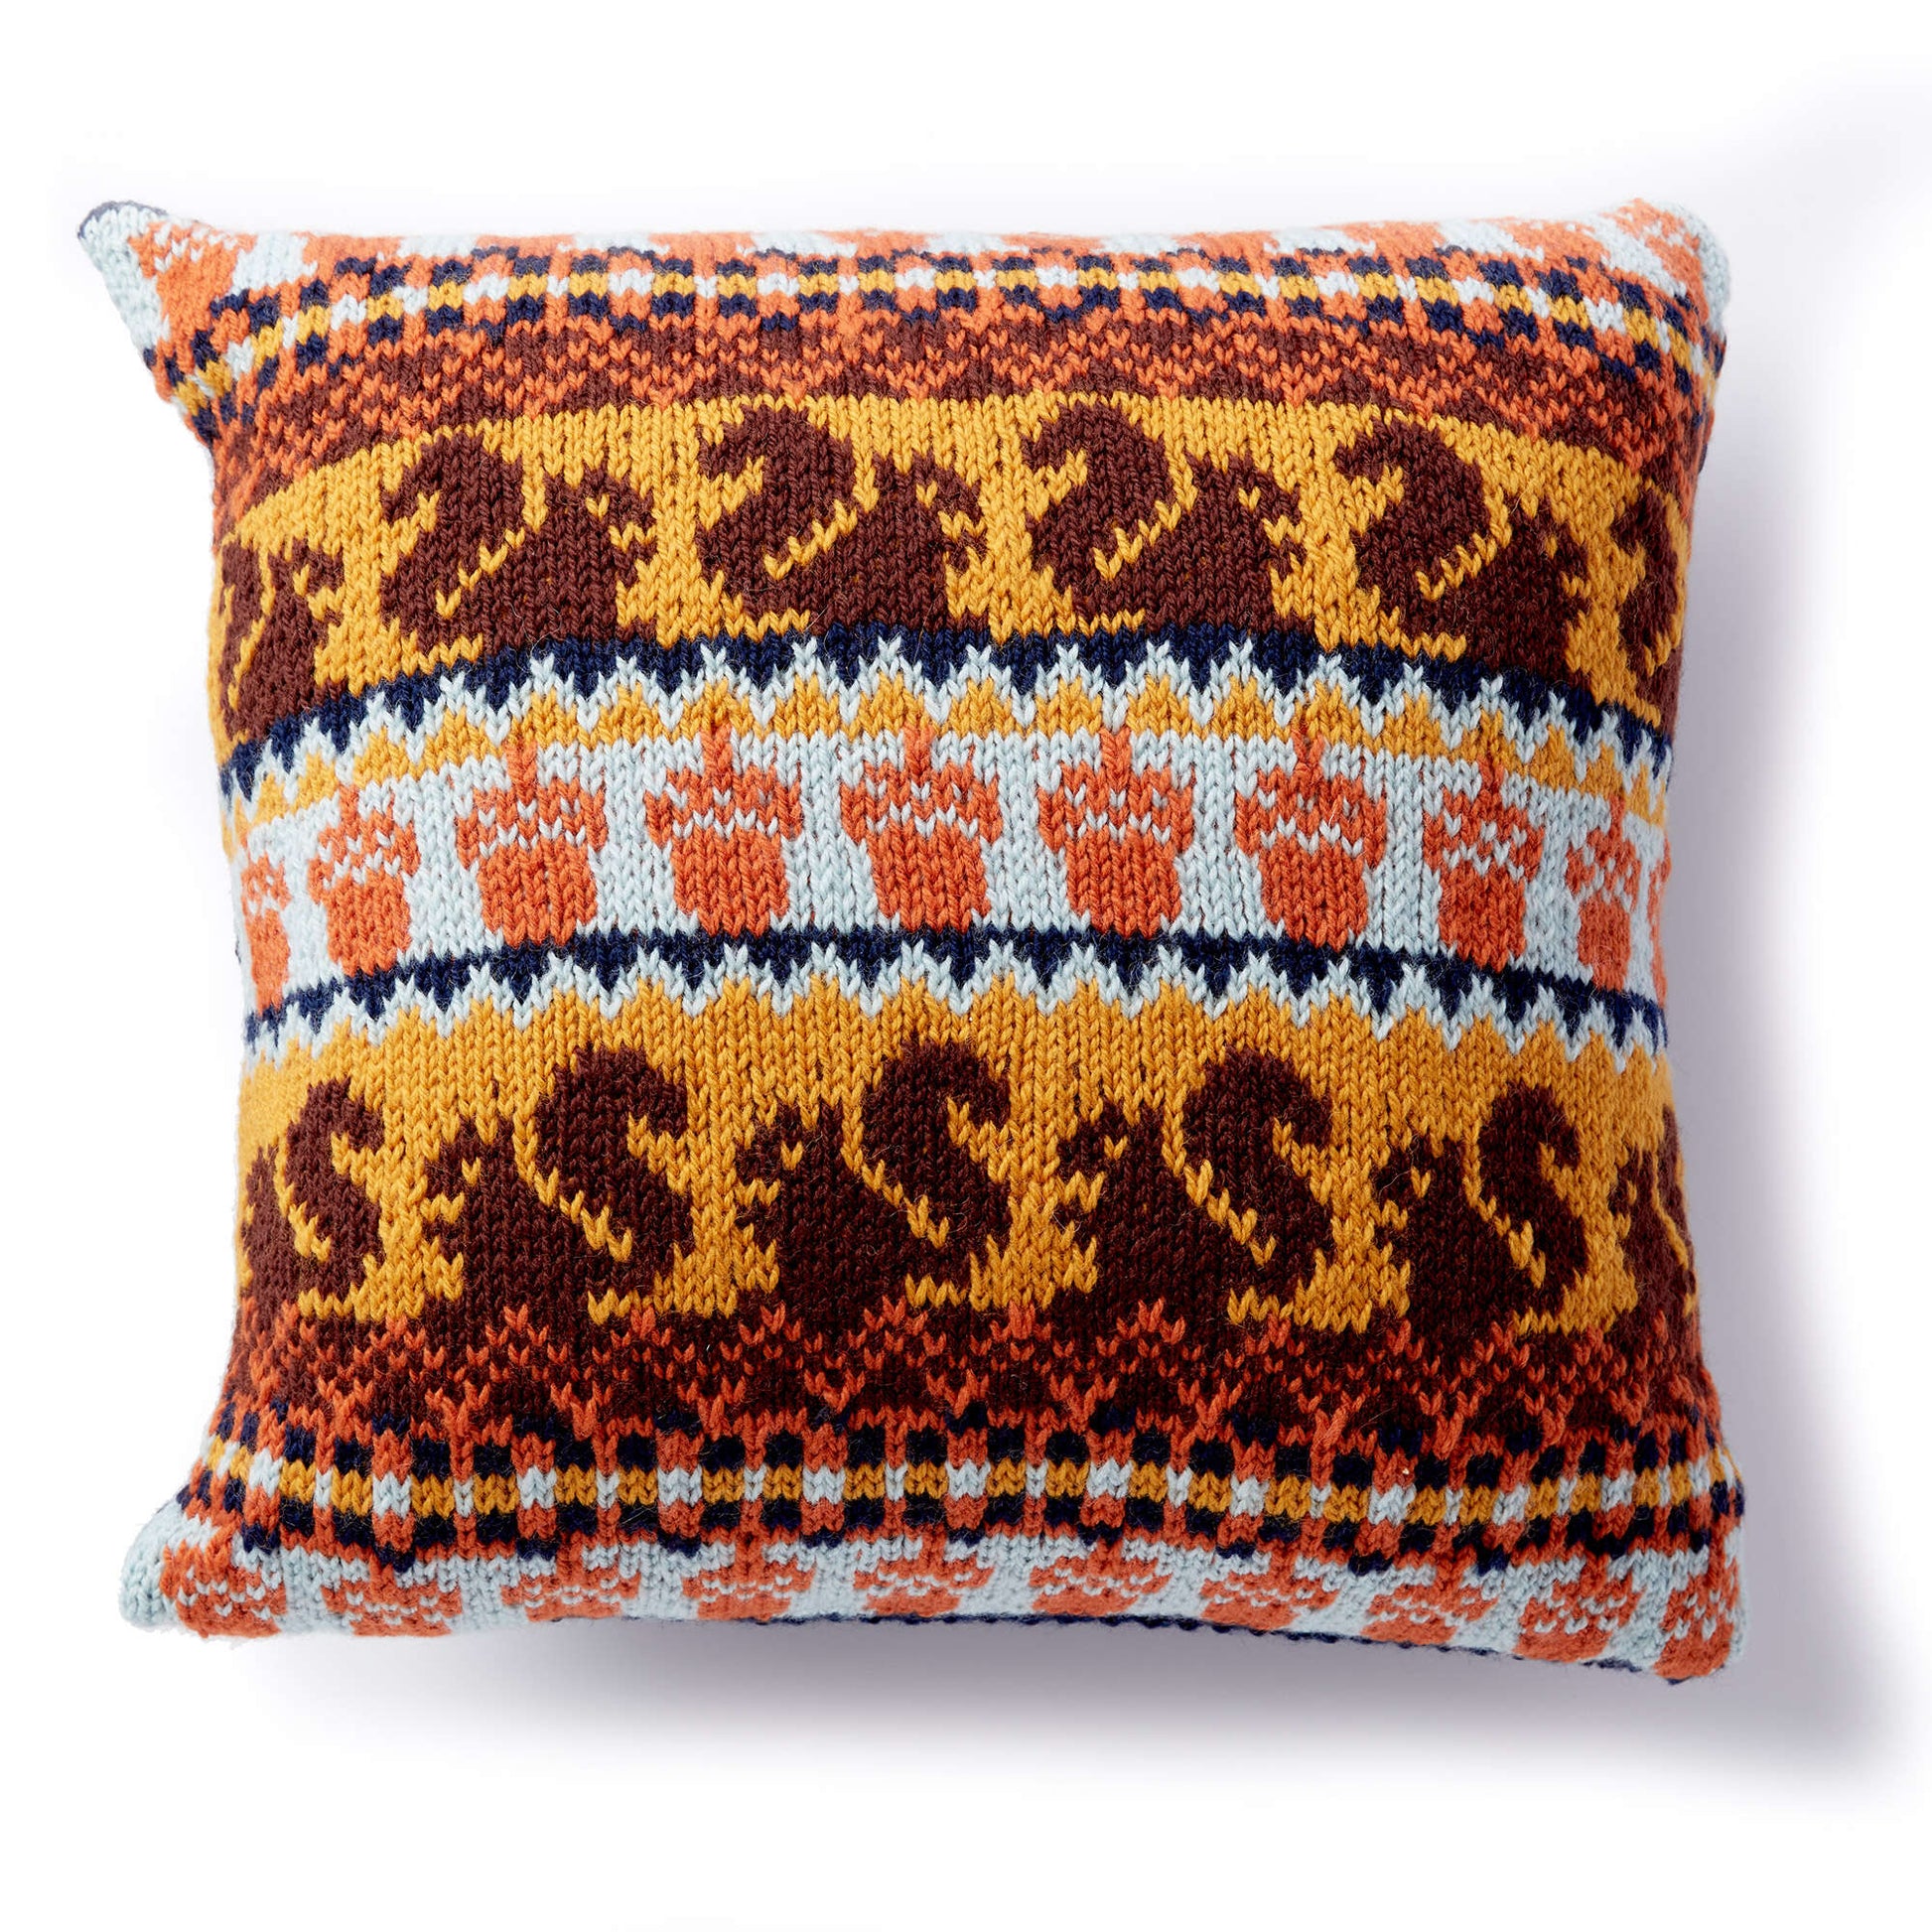 Patons Autumn Harvest Knit Pillow Single Size